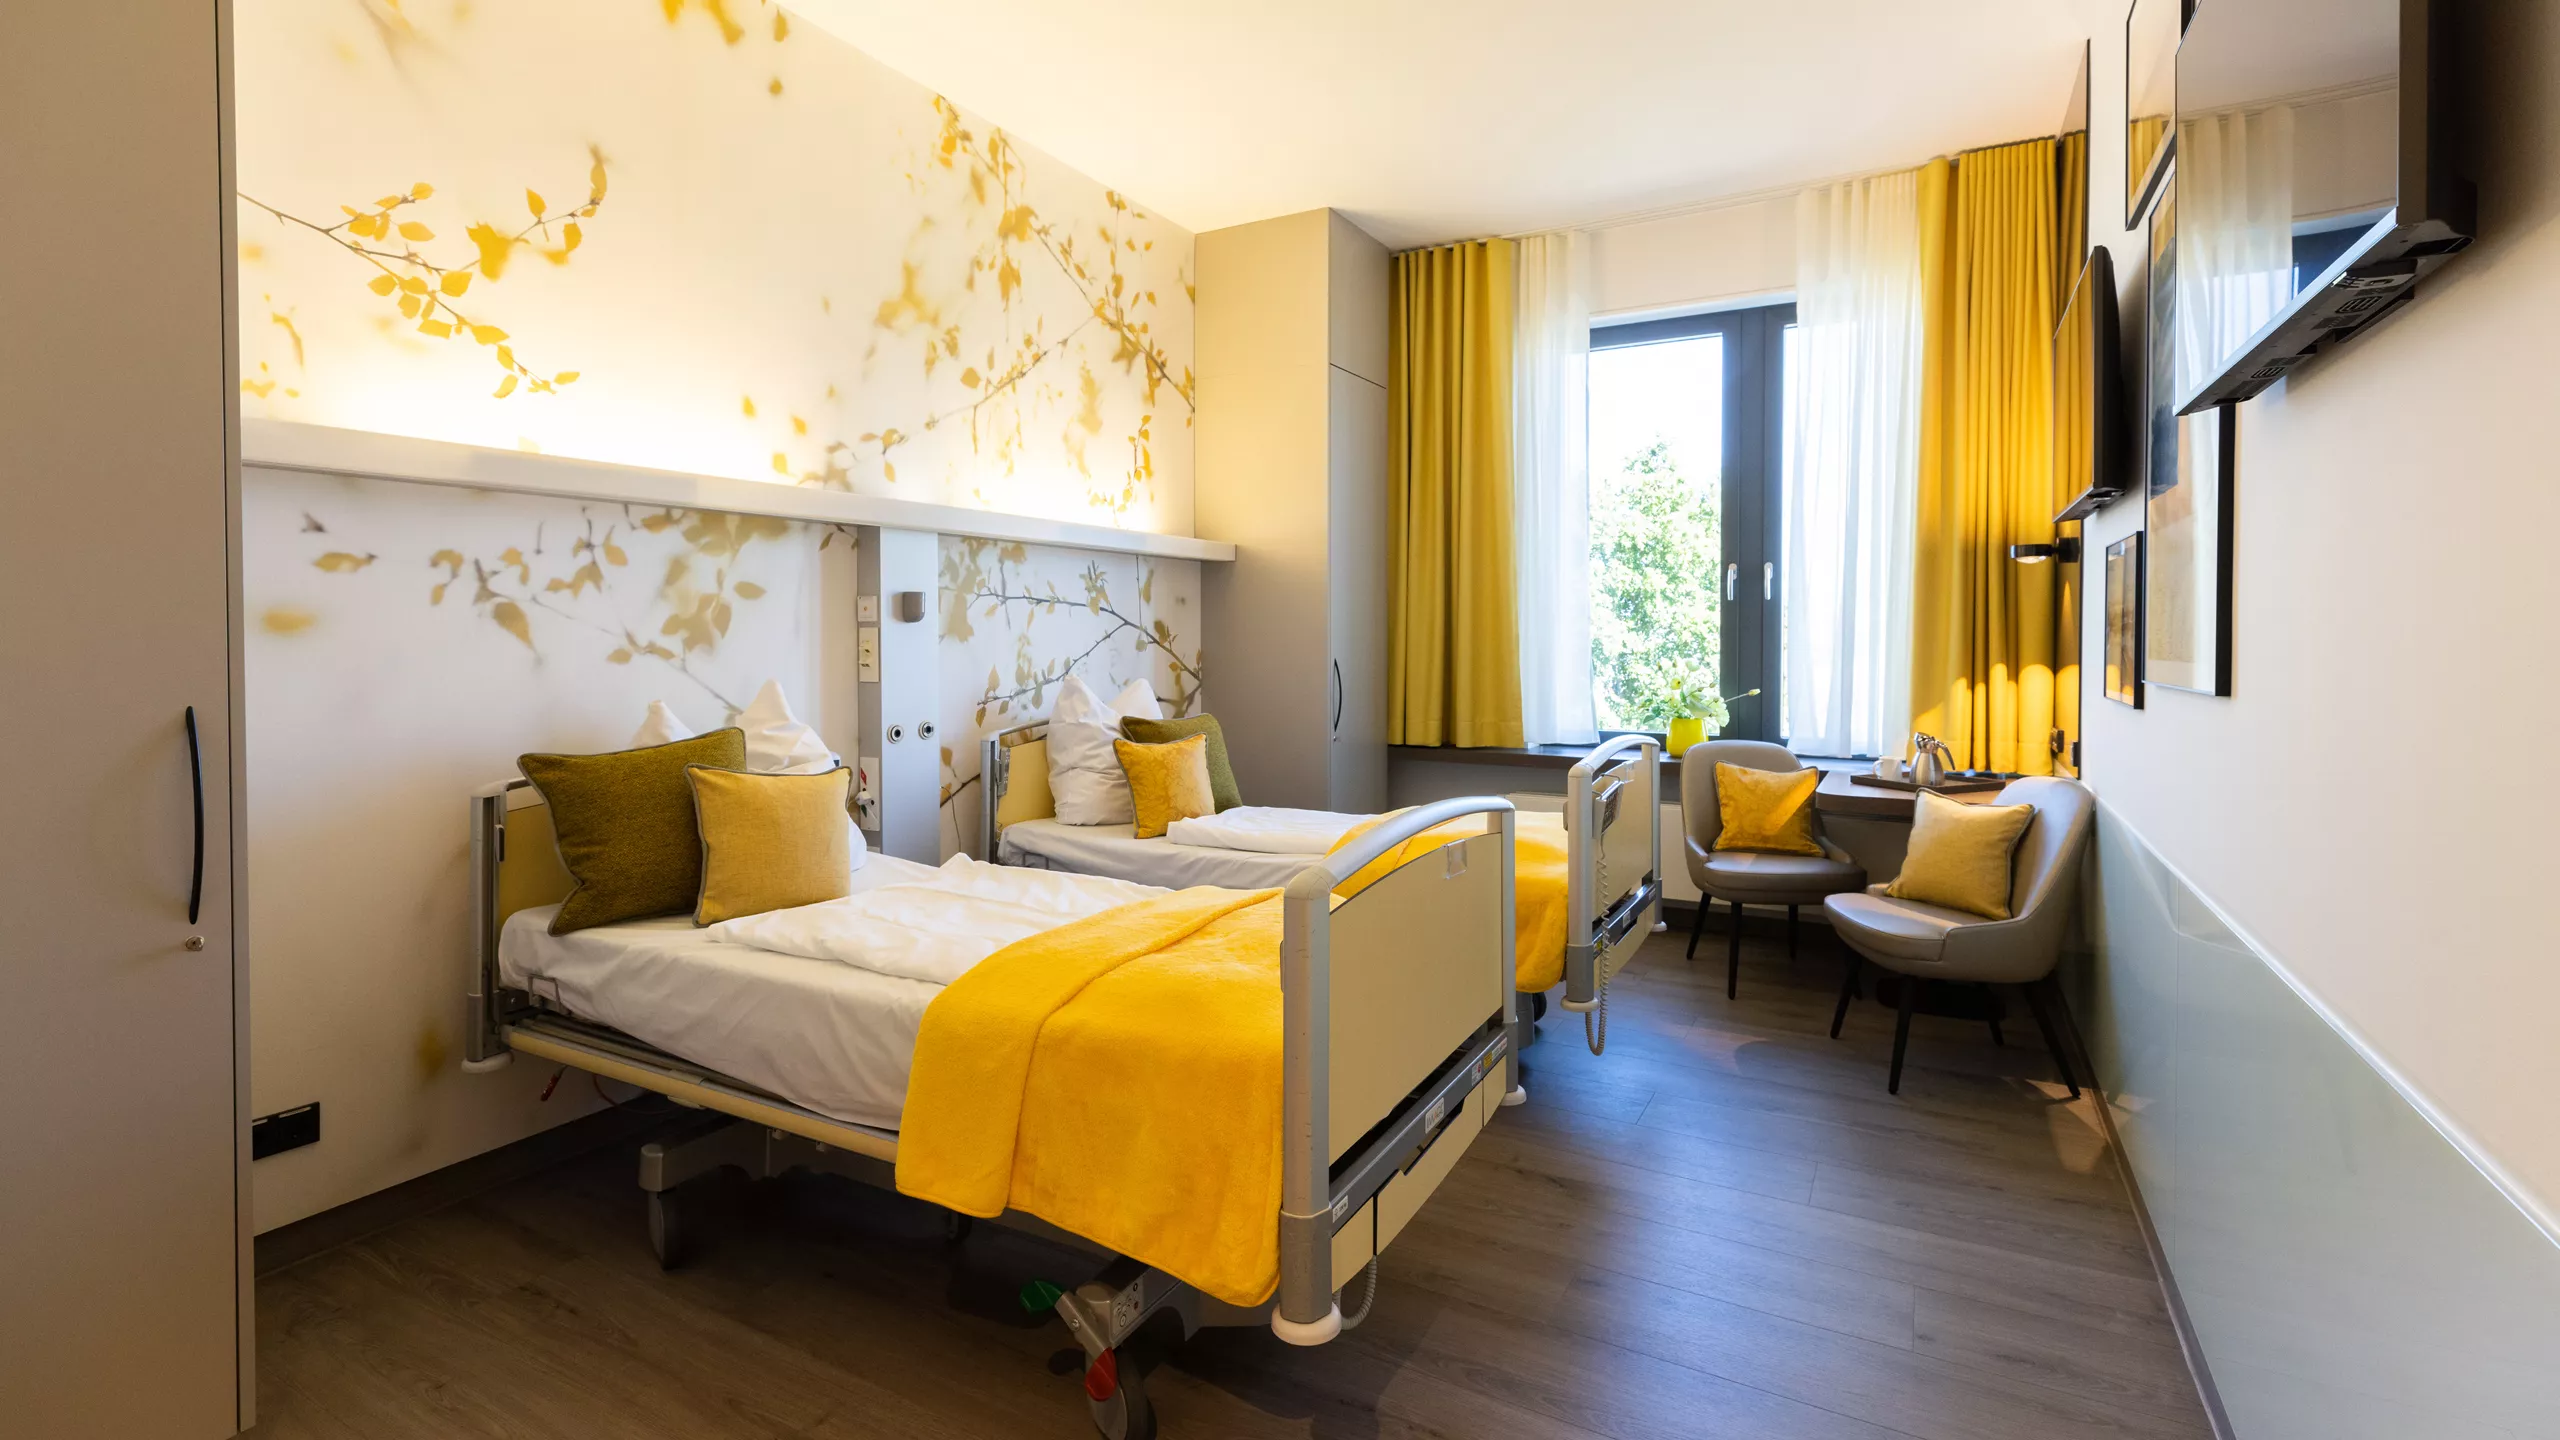 Patientenzimmer in gelber Farbgebung